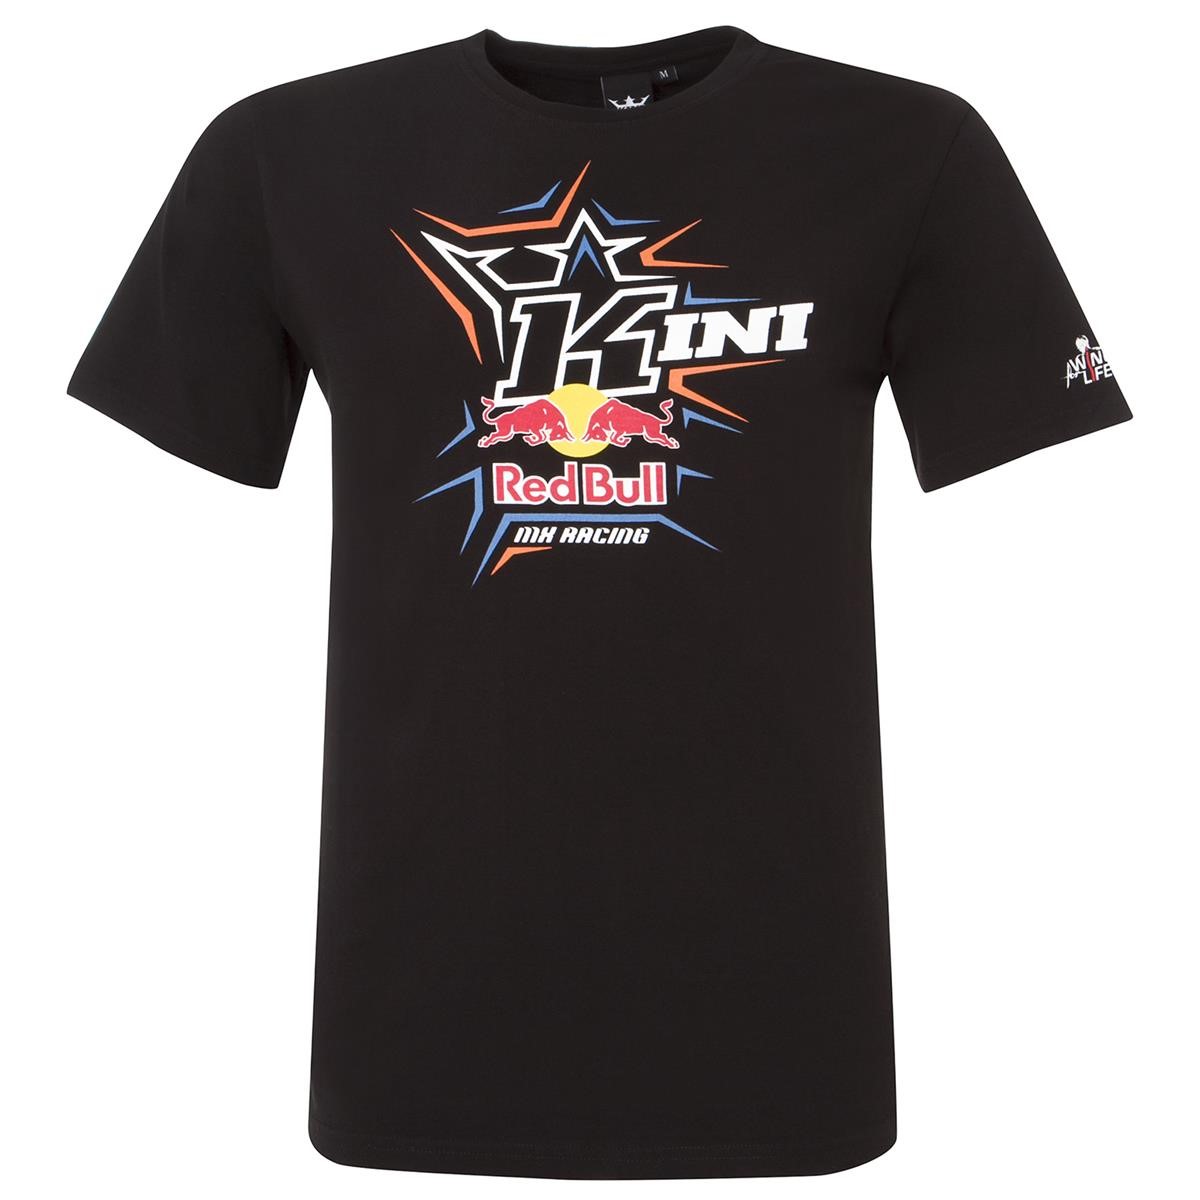 Kini Red Bull T-Shirt Spikes Black